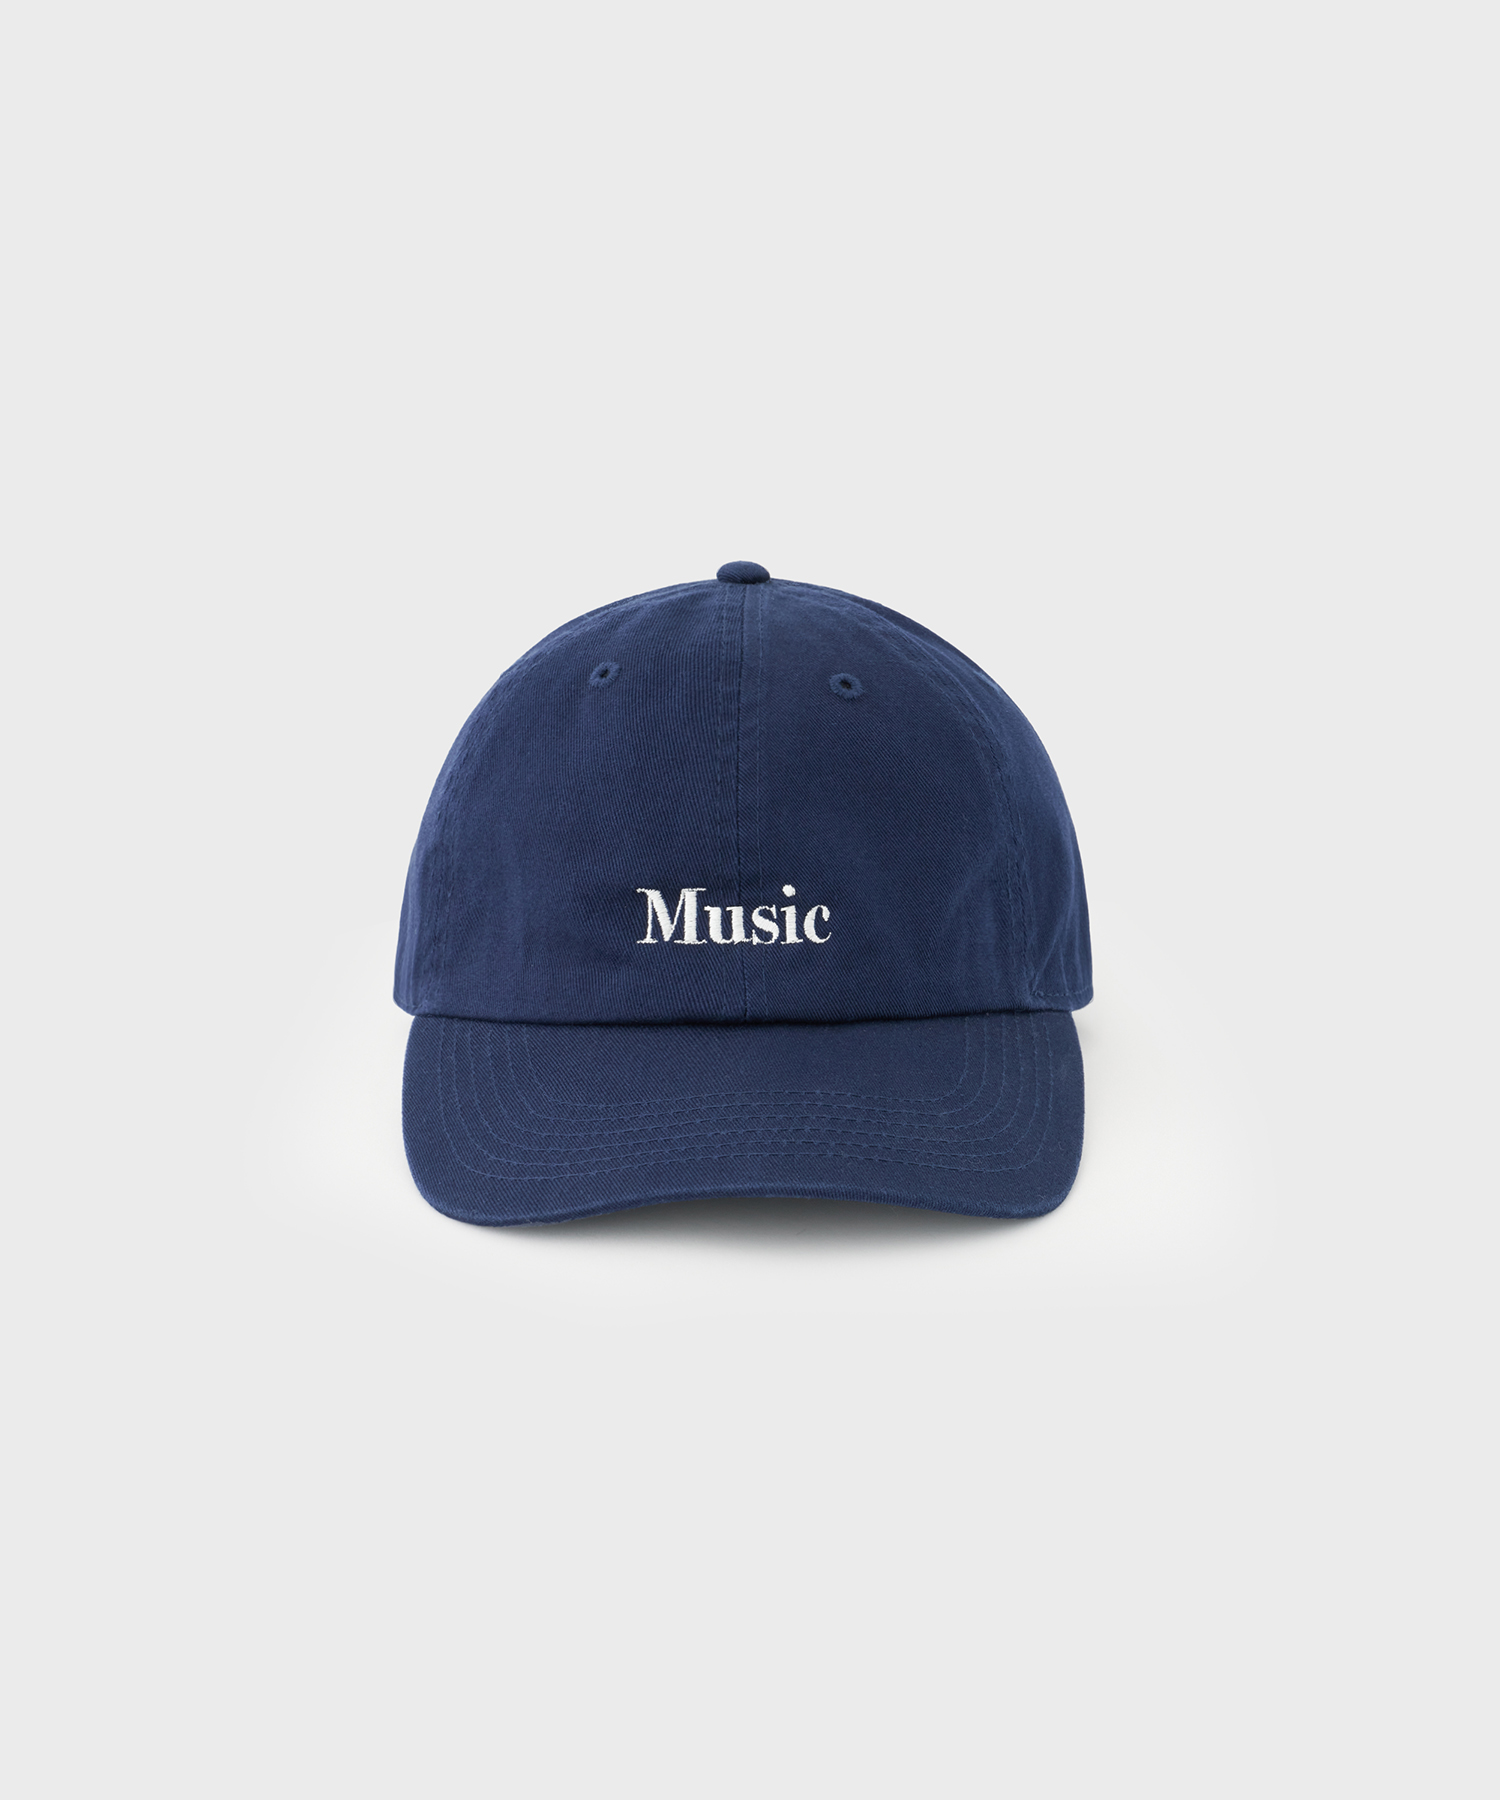 Music Cap (Navy)